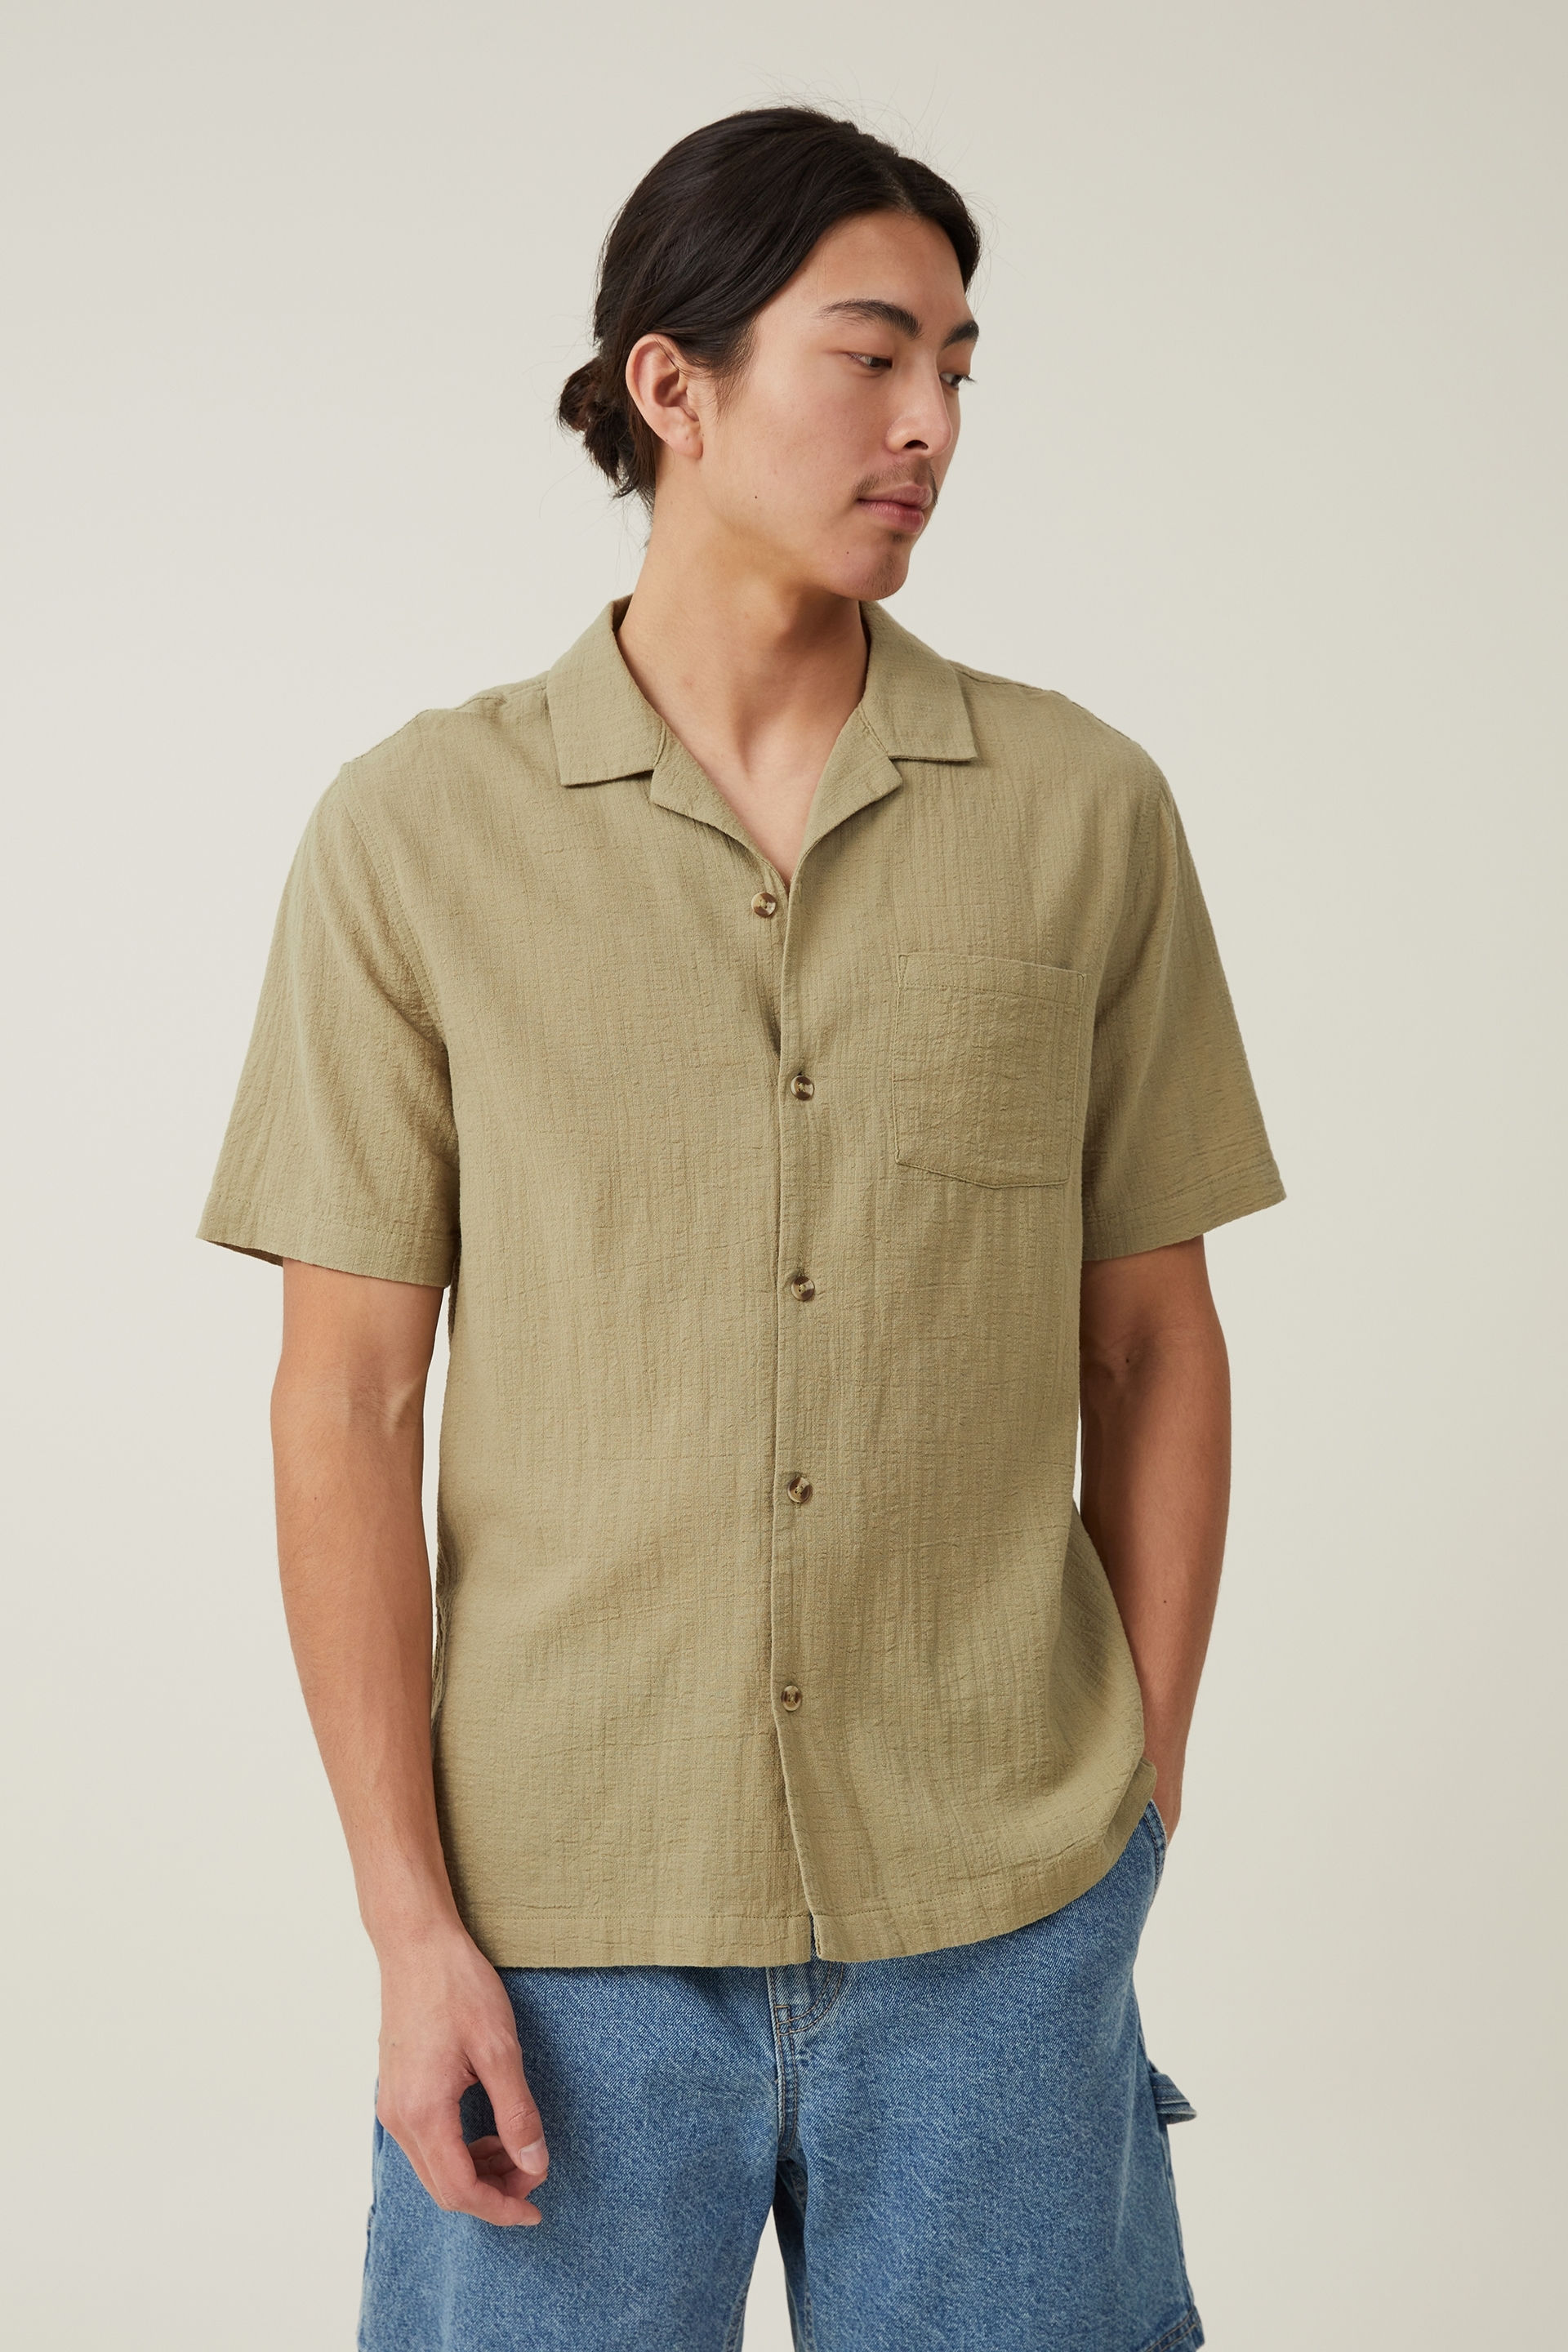 Cotton On Men - Riviera Short Sleeve Shirt - Avocado